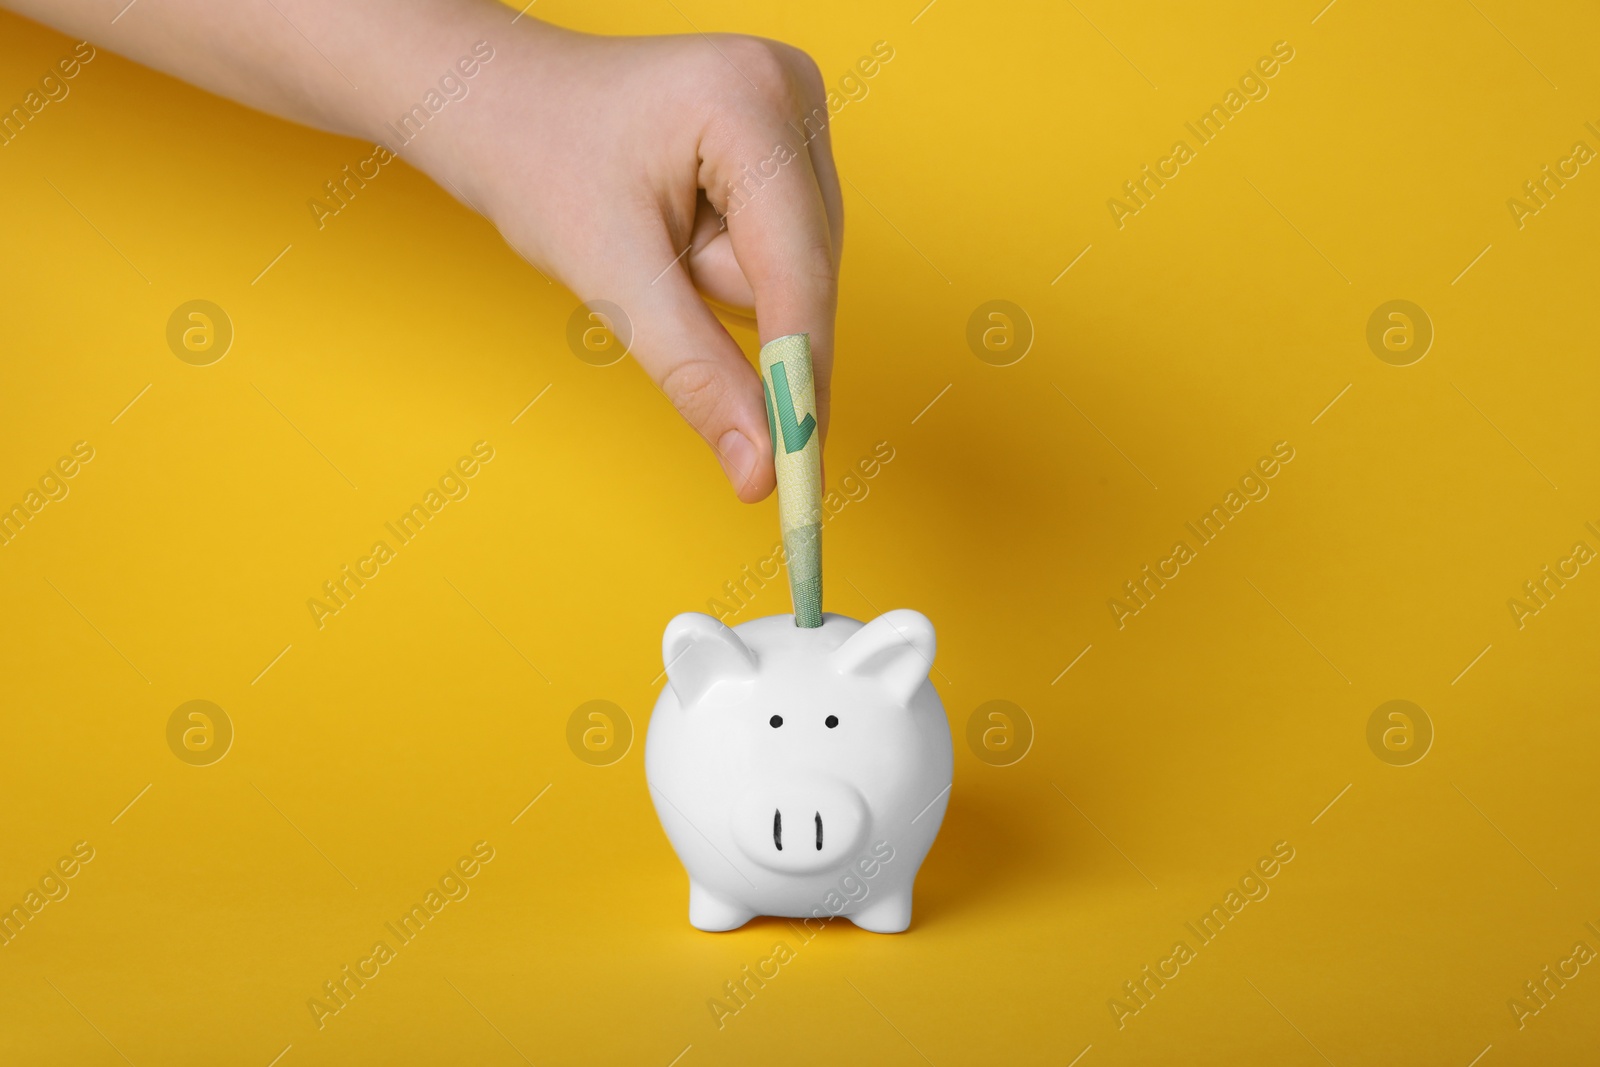 Photo of Woman putting euro banknote into ceramic piggy bank on yellow background, closeup. Financial savings